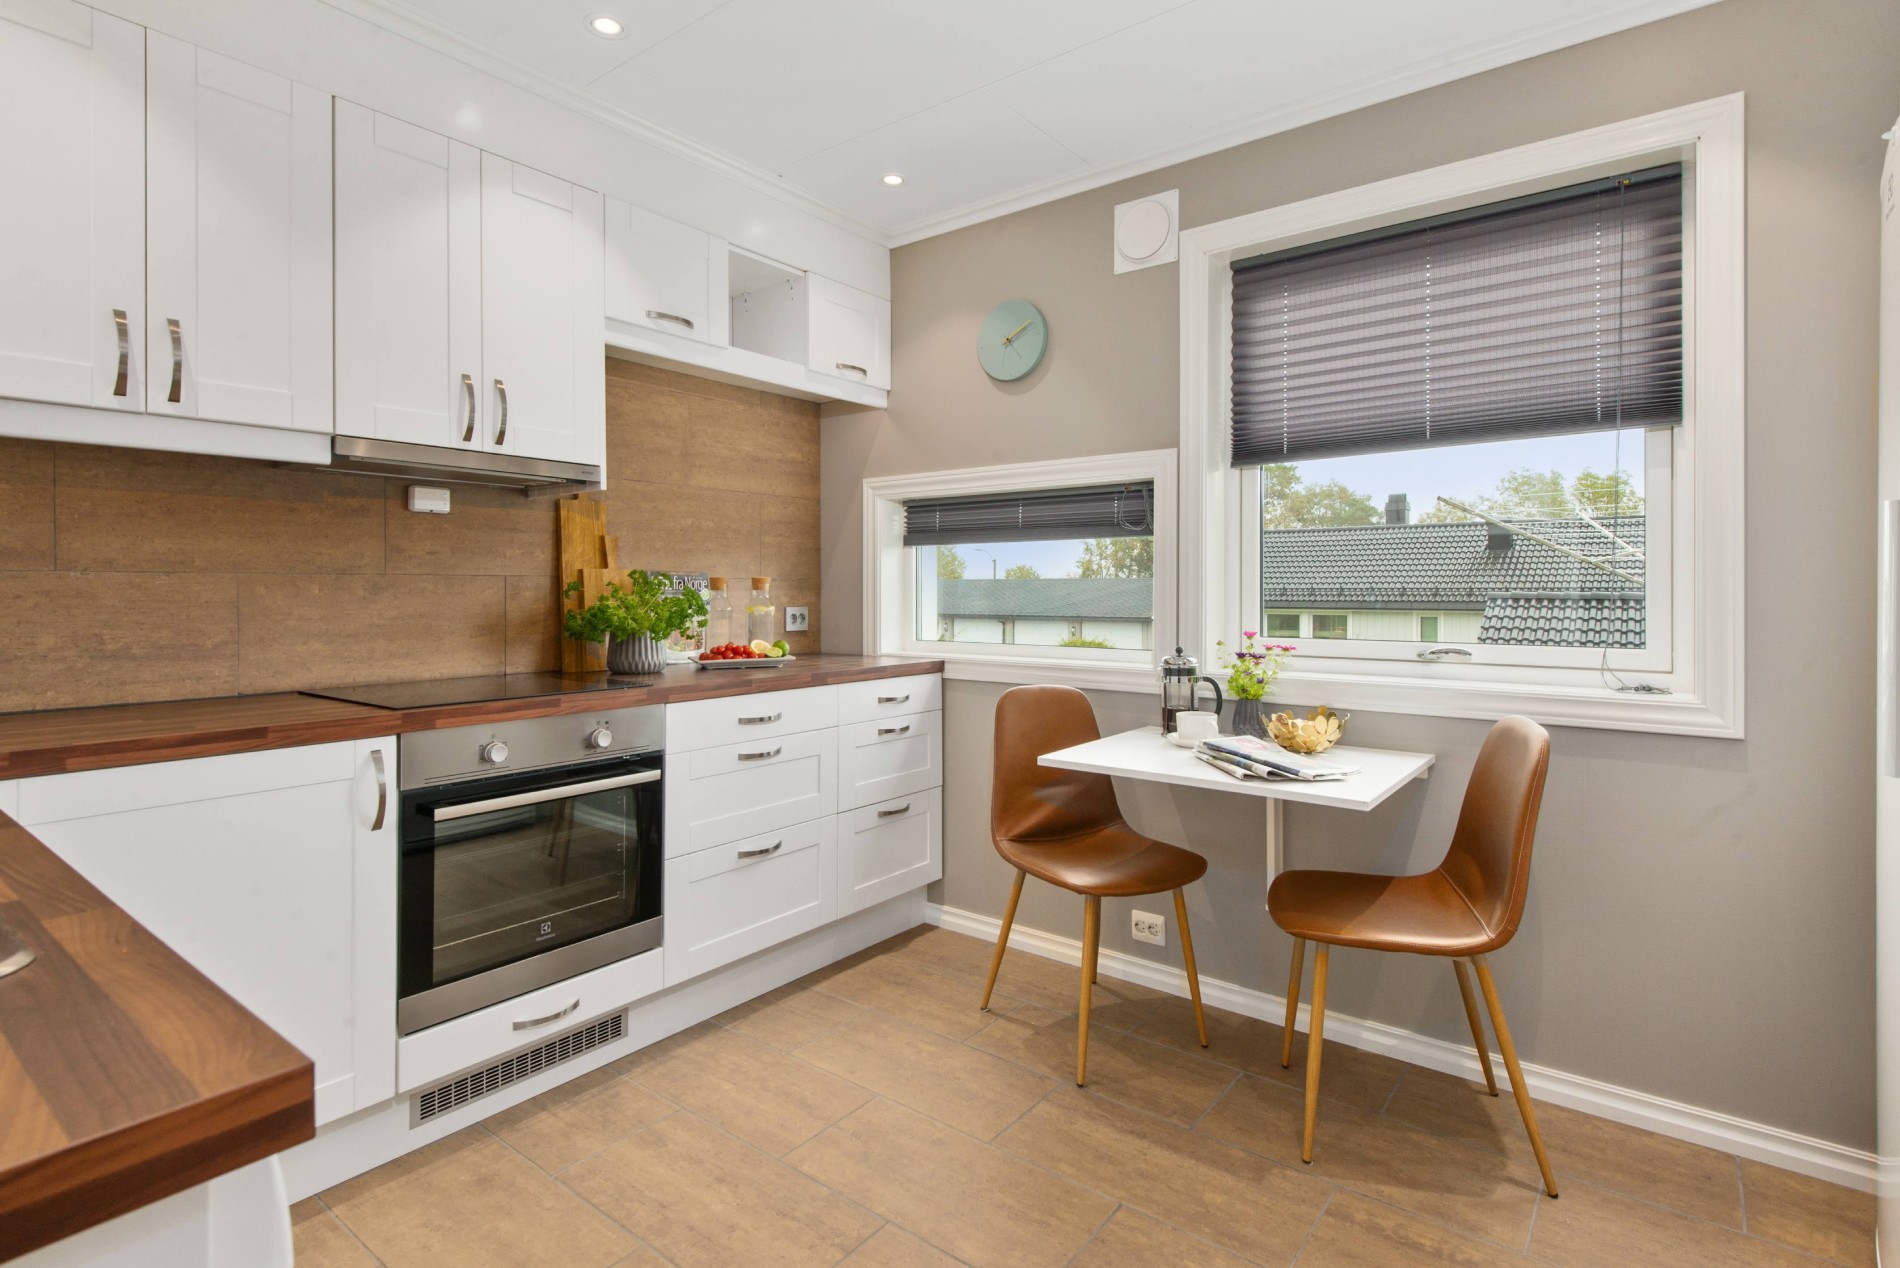 Stylish modular kitchen designs for small kitchens